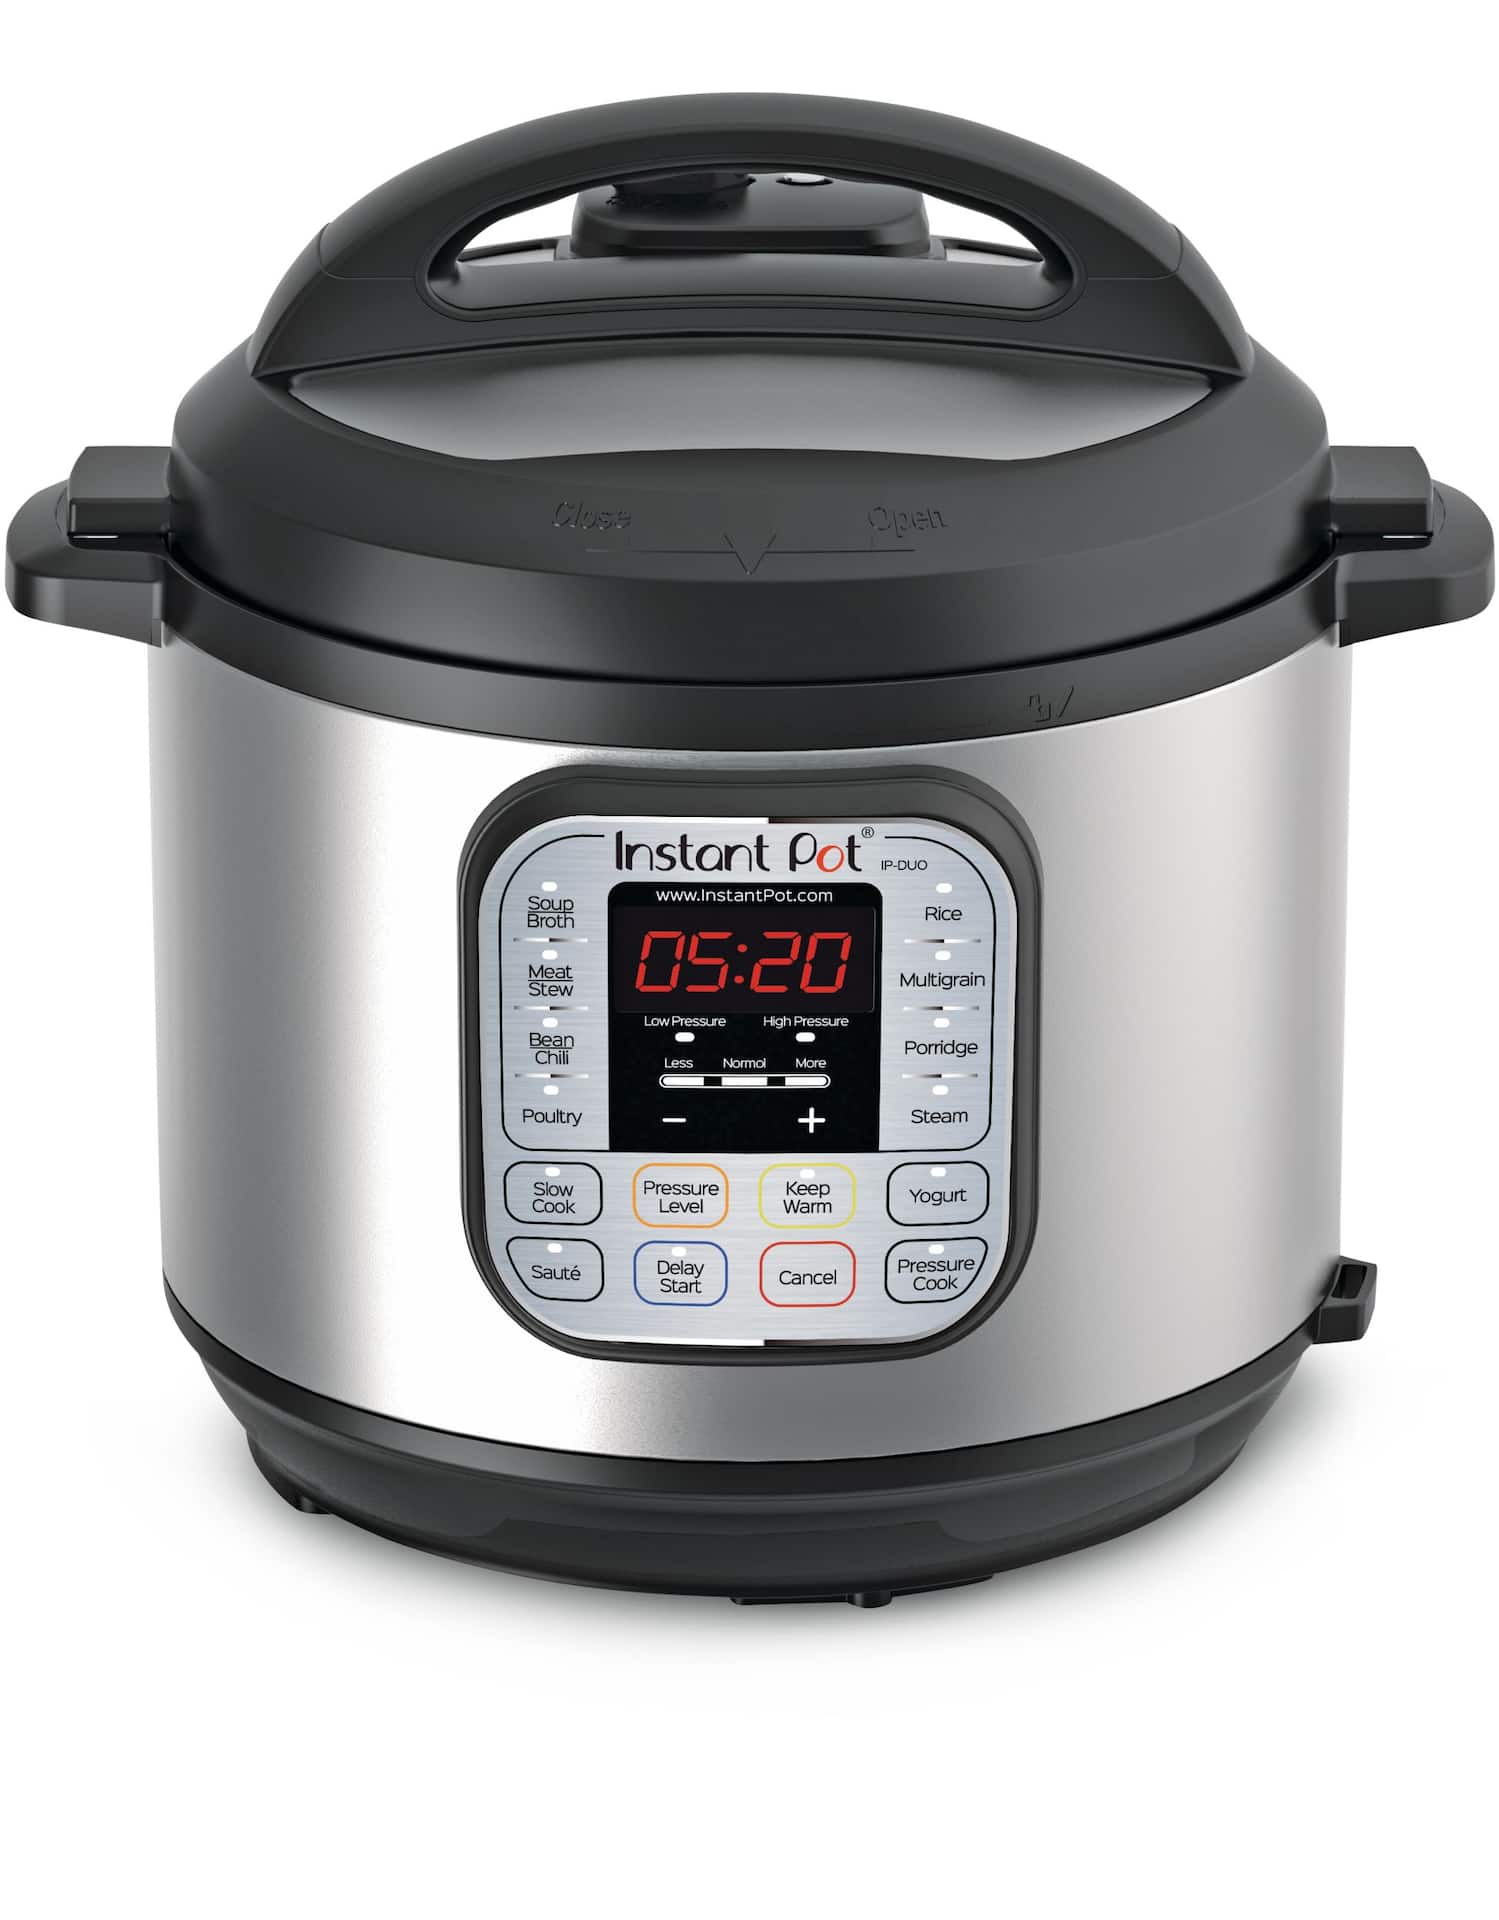 https://media-www.canadiantire.ca/product/living/kitchen/kitchen-appliances/0432672/instant-pot-duo-6-quart-pressure-cooker-3d1723a6-7913-4807-bb3b-11d45746185f-jpgrendition.jpg